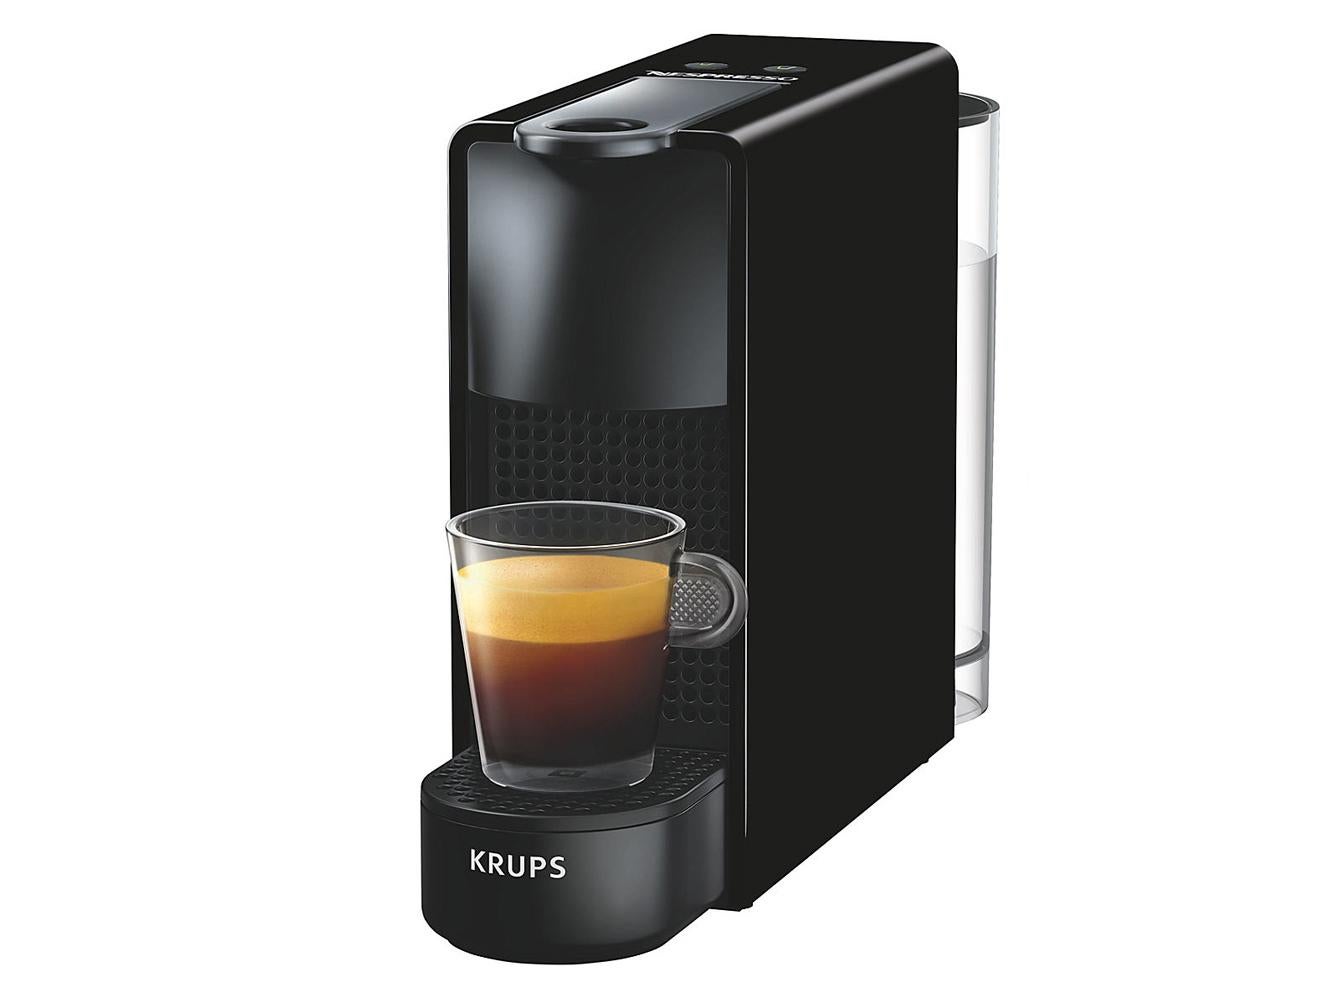 Best Nespresso pod coffee machines UK prices and reviews -Krups Nespresso Essenza